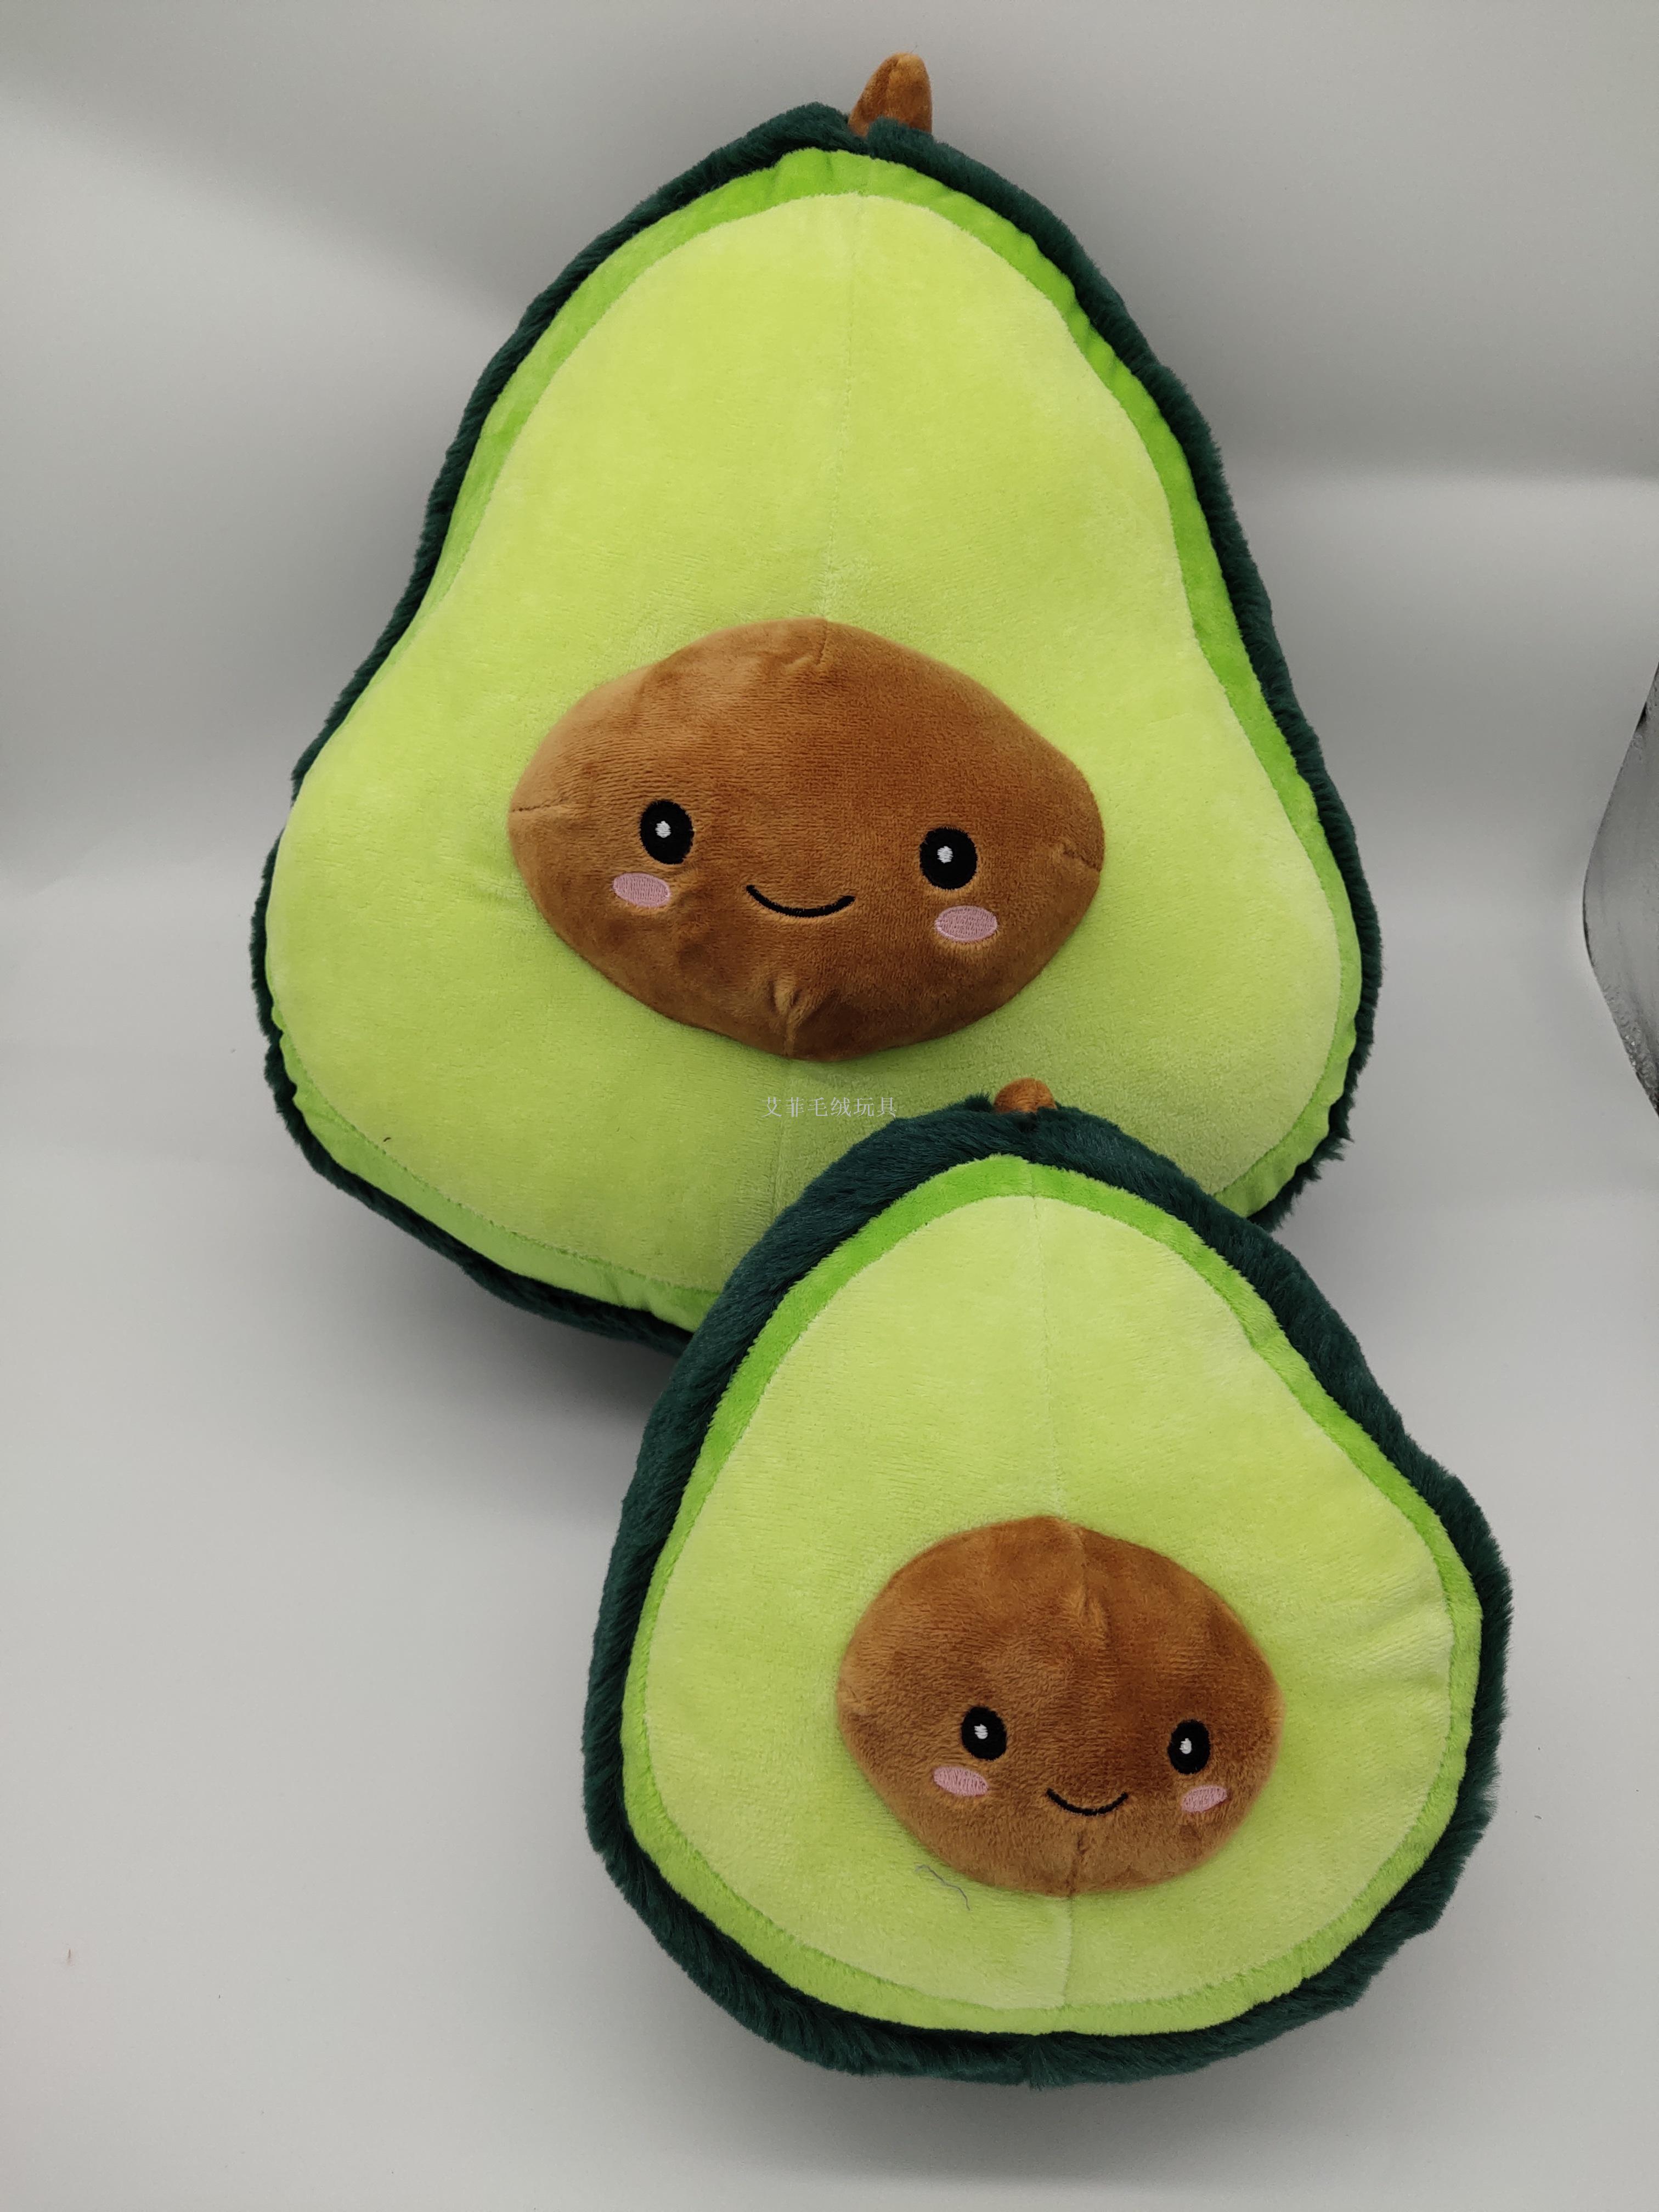 avocado cuddly toy